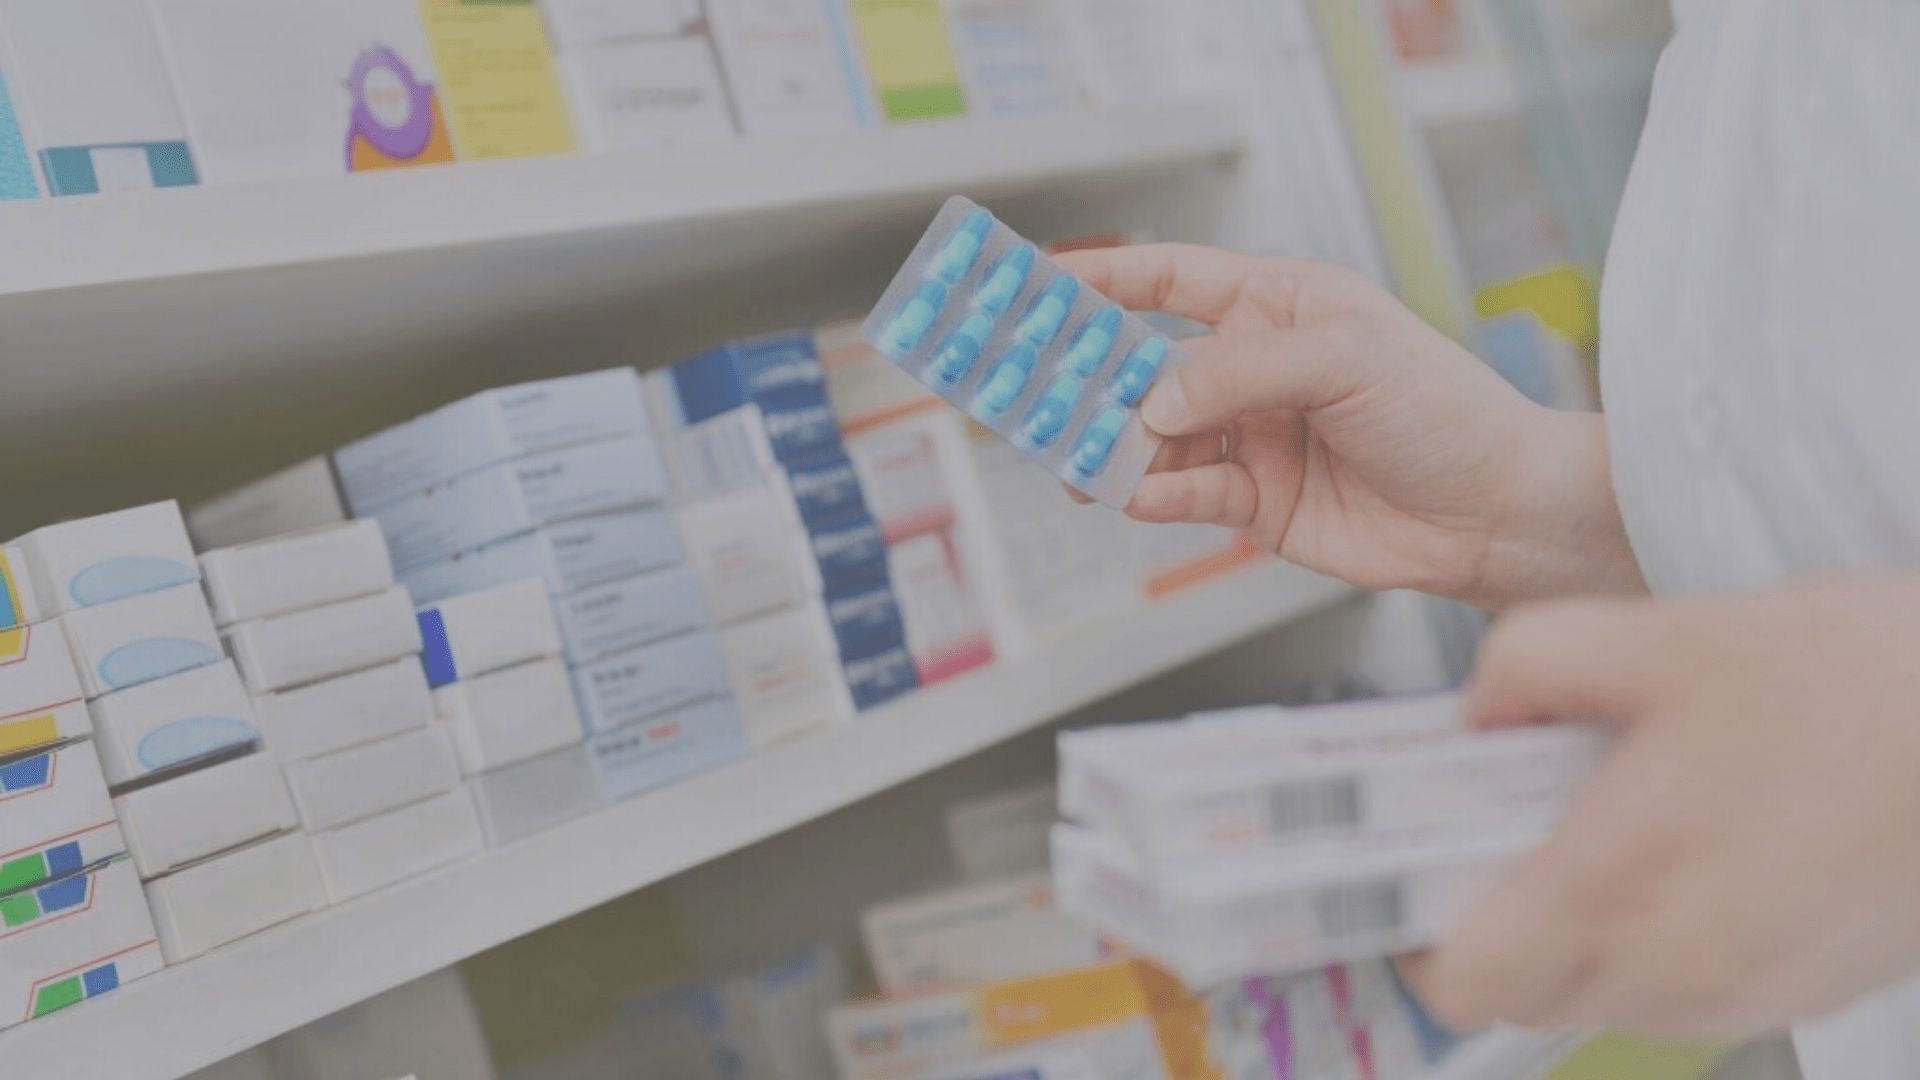 A nurse selecting medication from a shelf